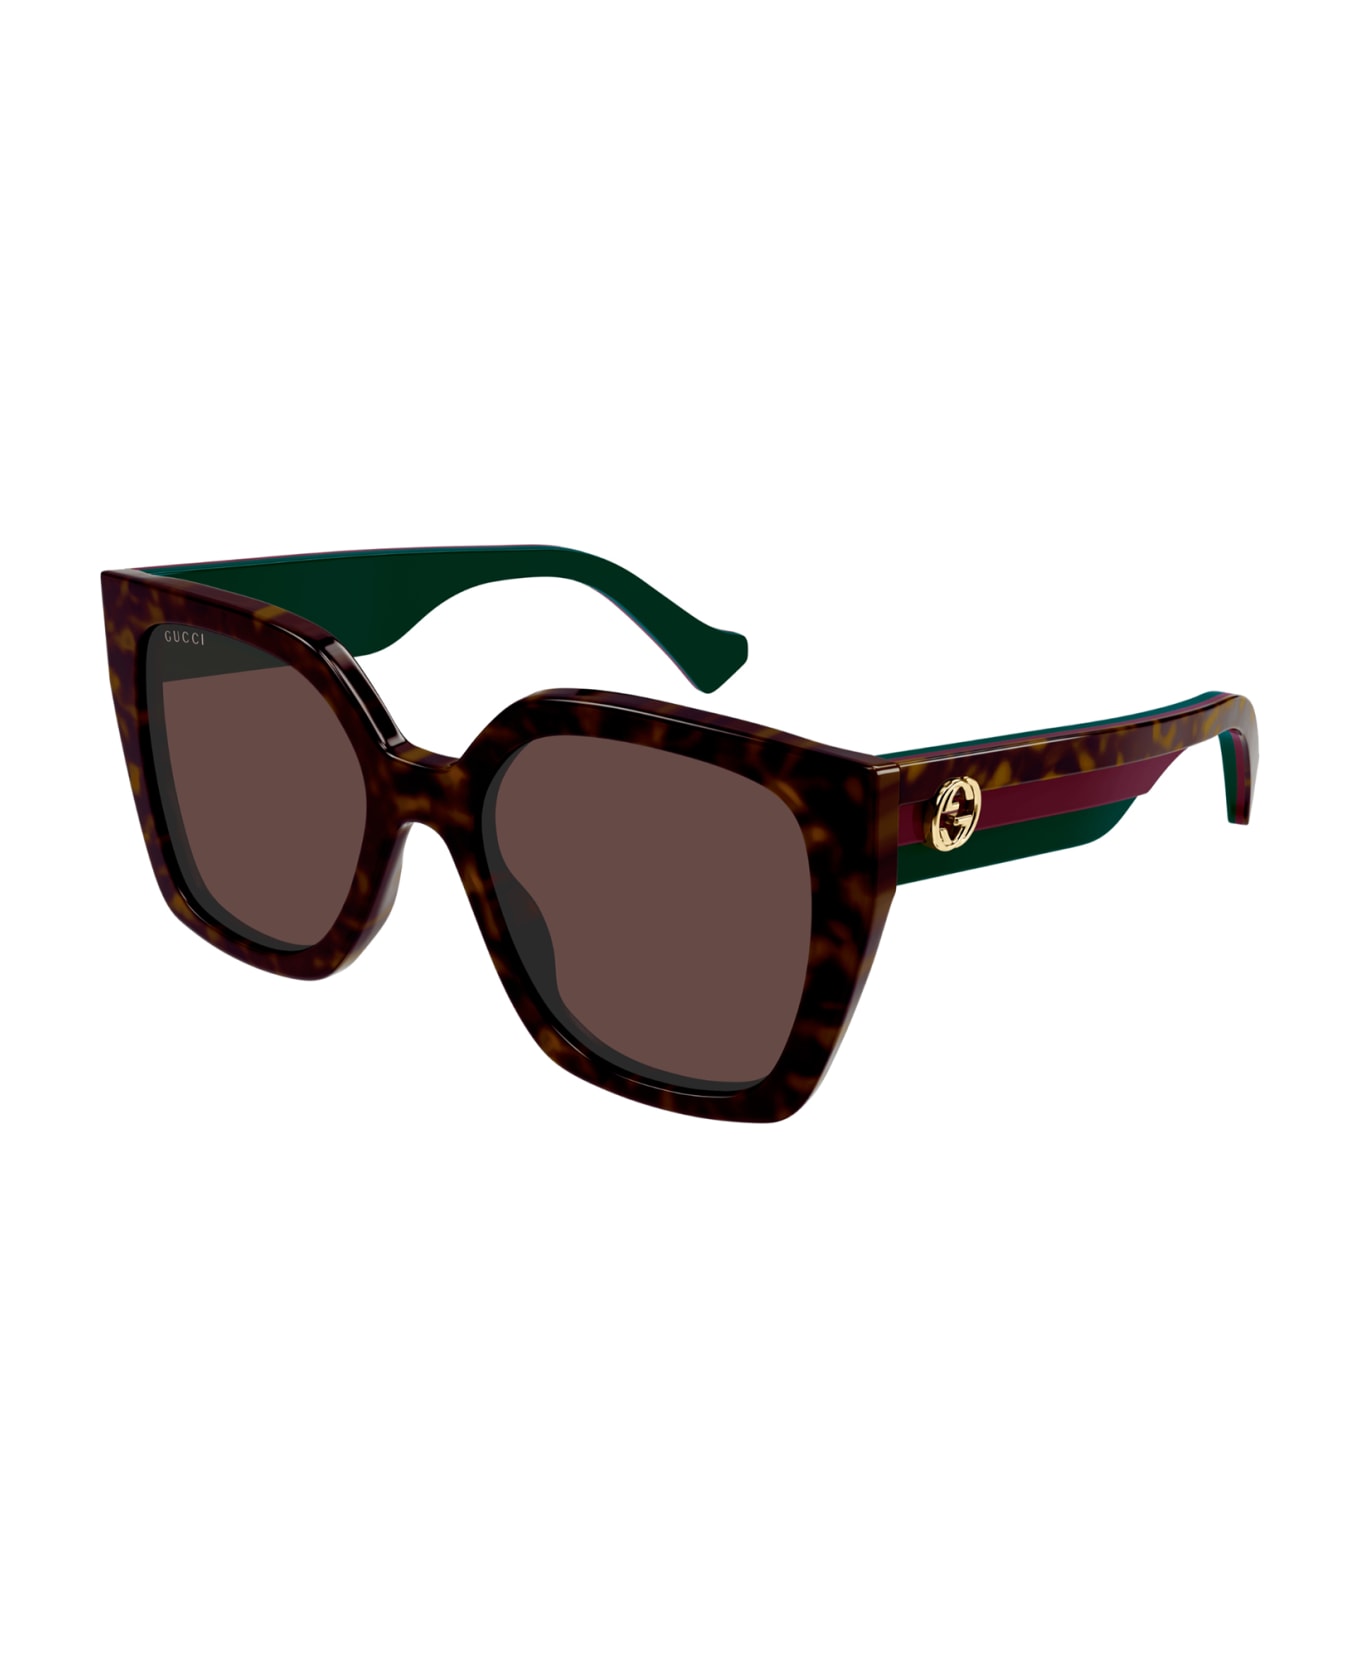 Gucci Eyewear Gg1300s Sunglasses - 002 havana havana brown